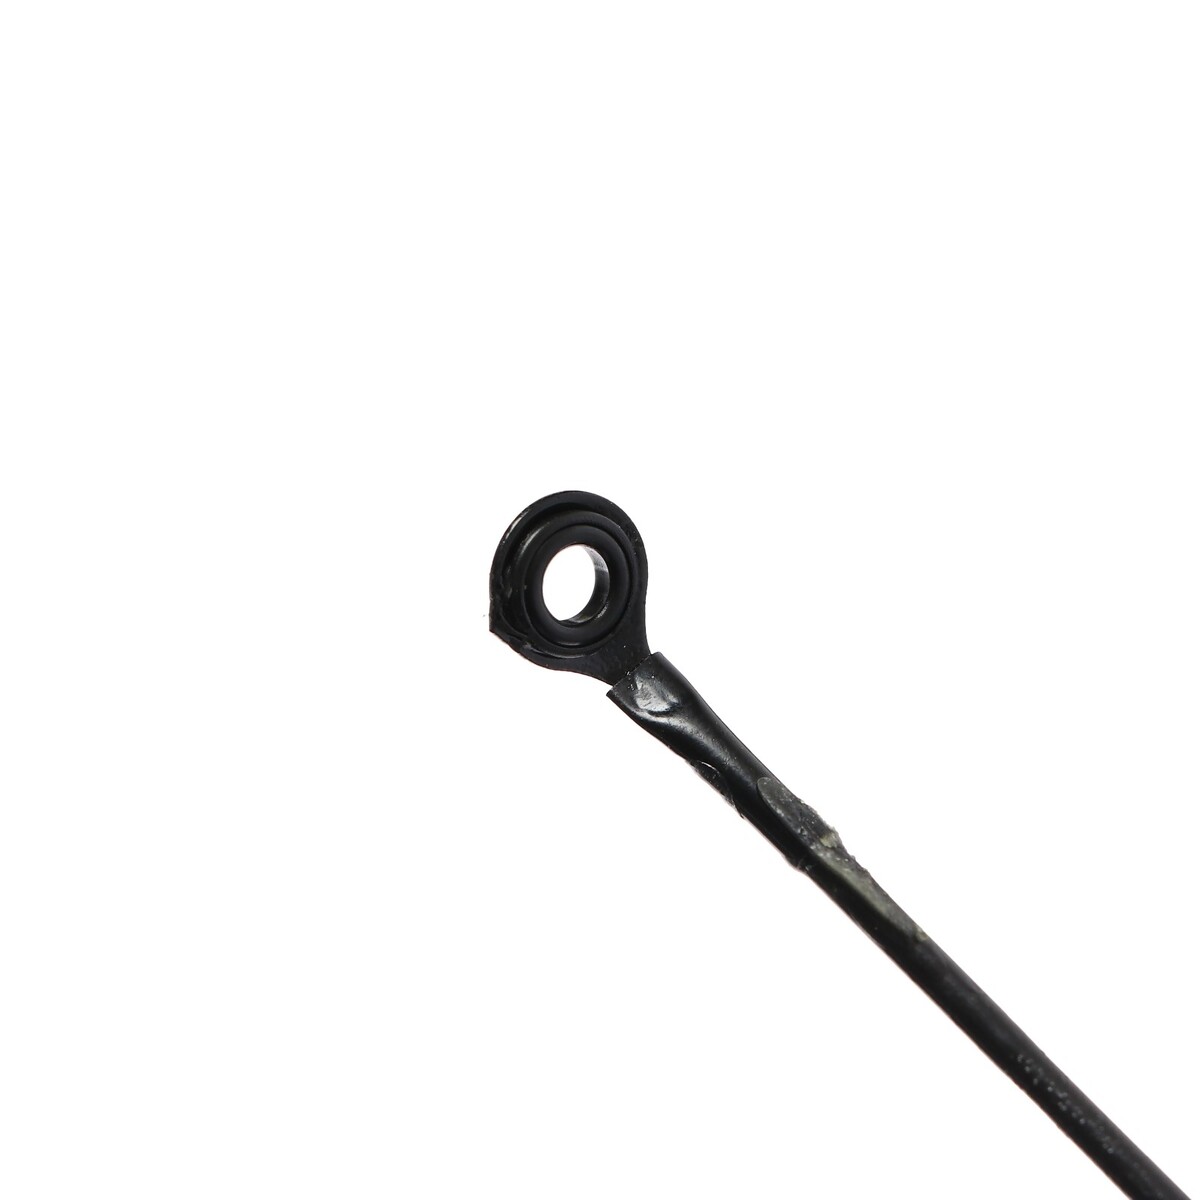 фото Удочка зимняя, ручка неопрен, диаметр катушки 9.5 см, hfb-1m no brand